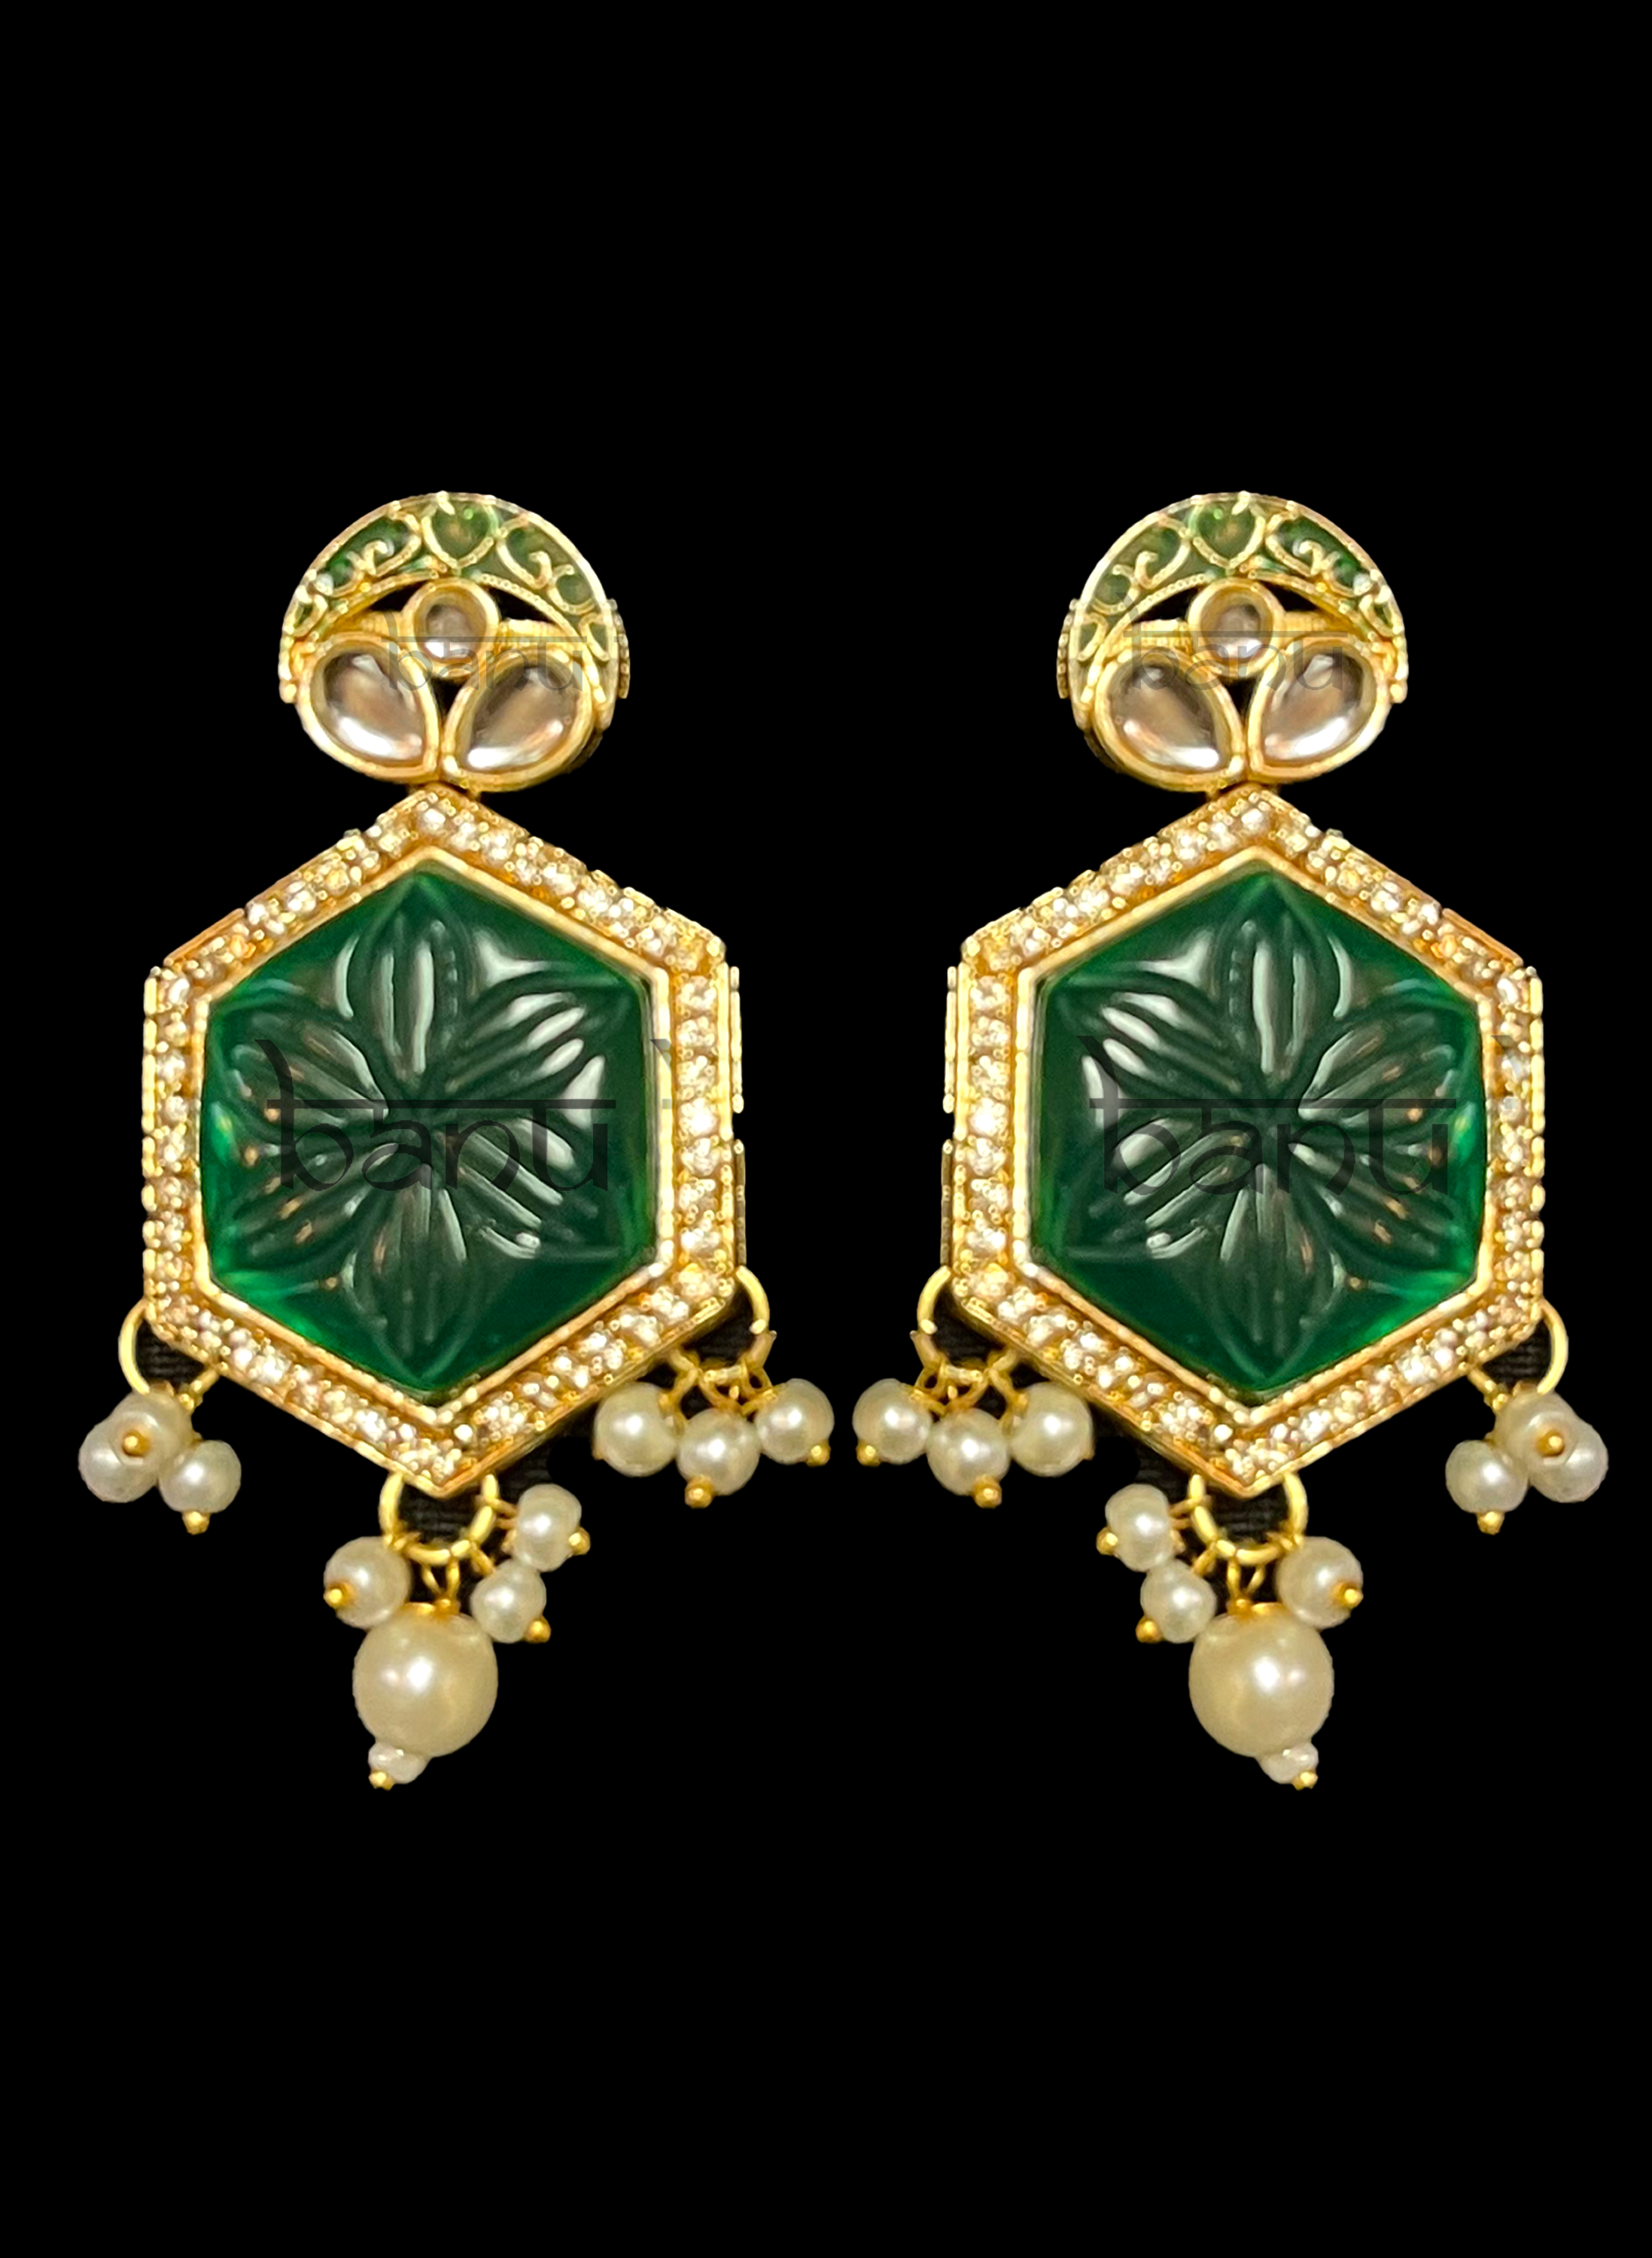 Green Indian Amrapalli earrings with kundan & pearls